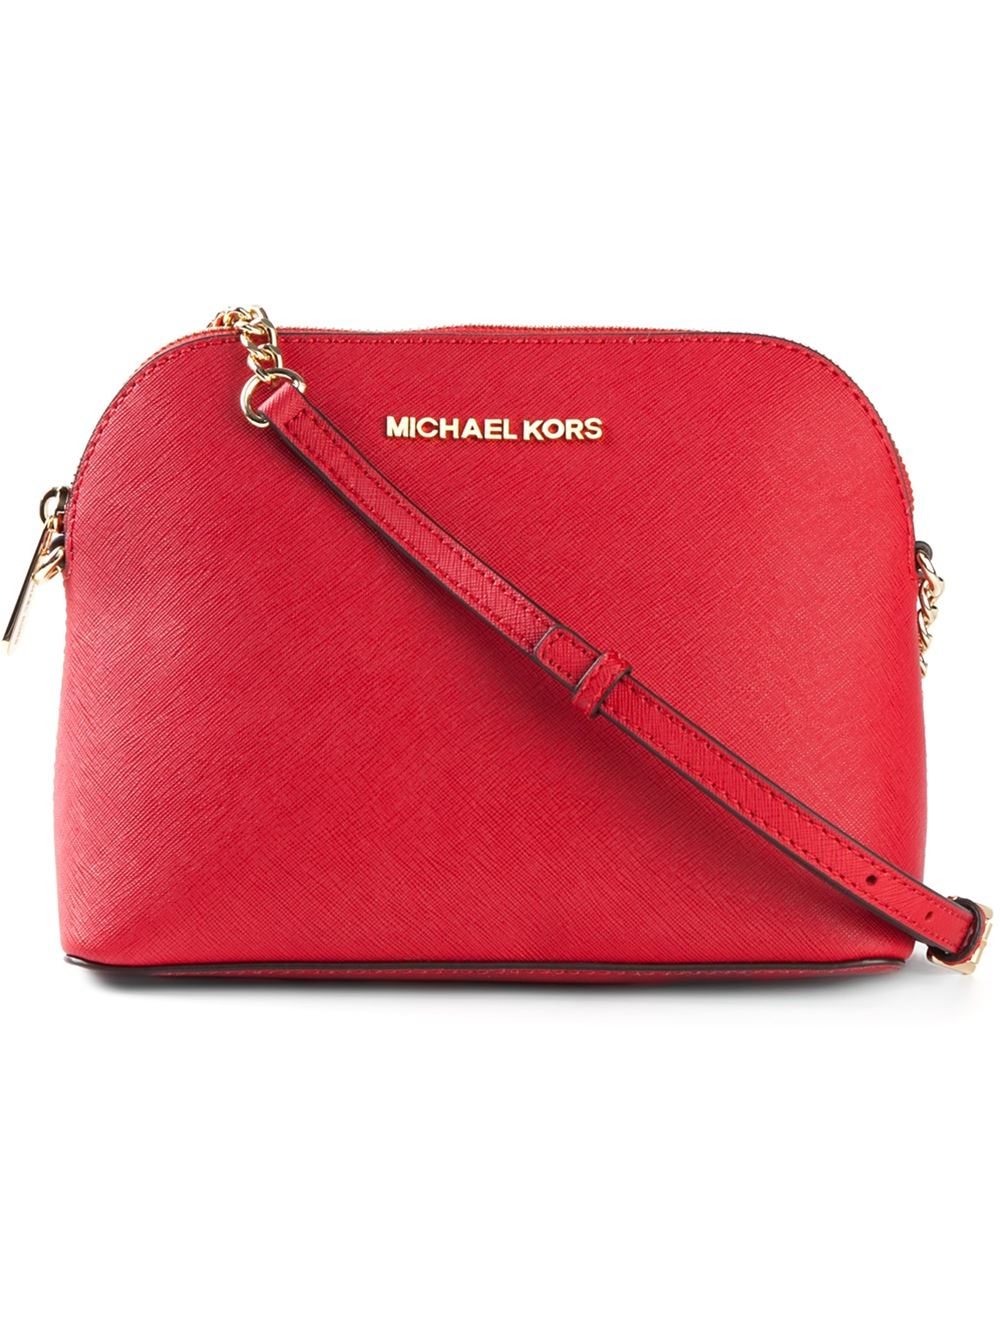 Michael Kors Large Bag Red | estudioespositoymiguel.com.ar